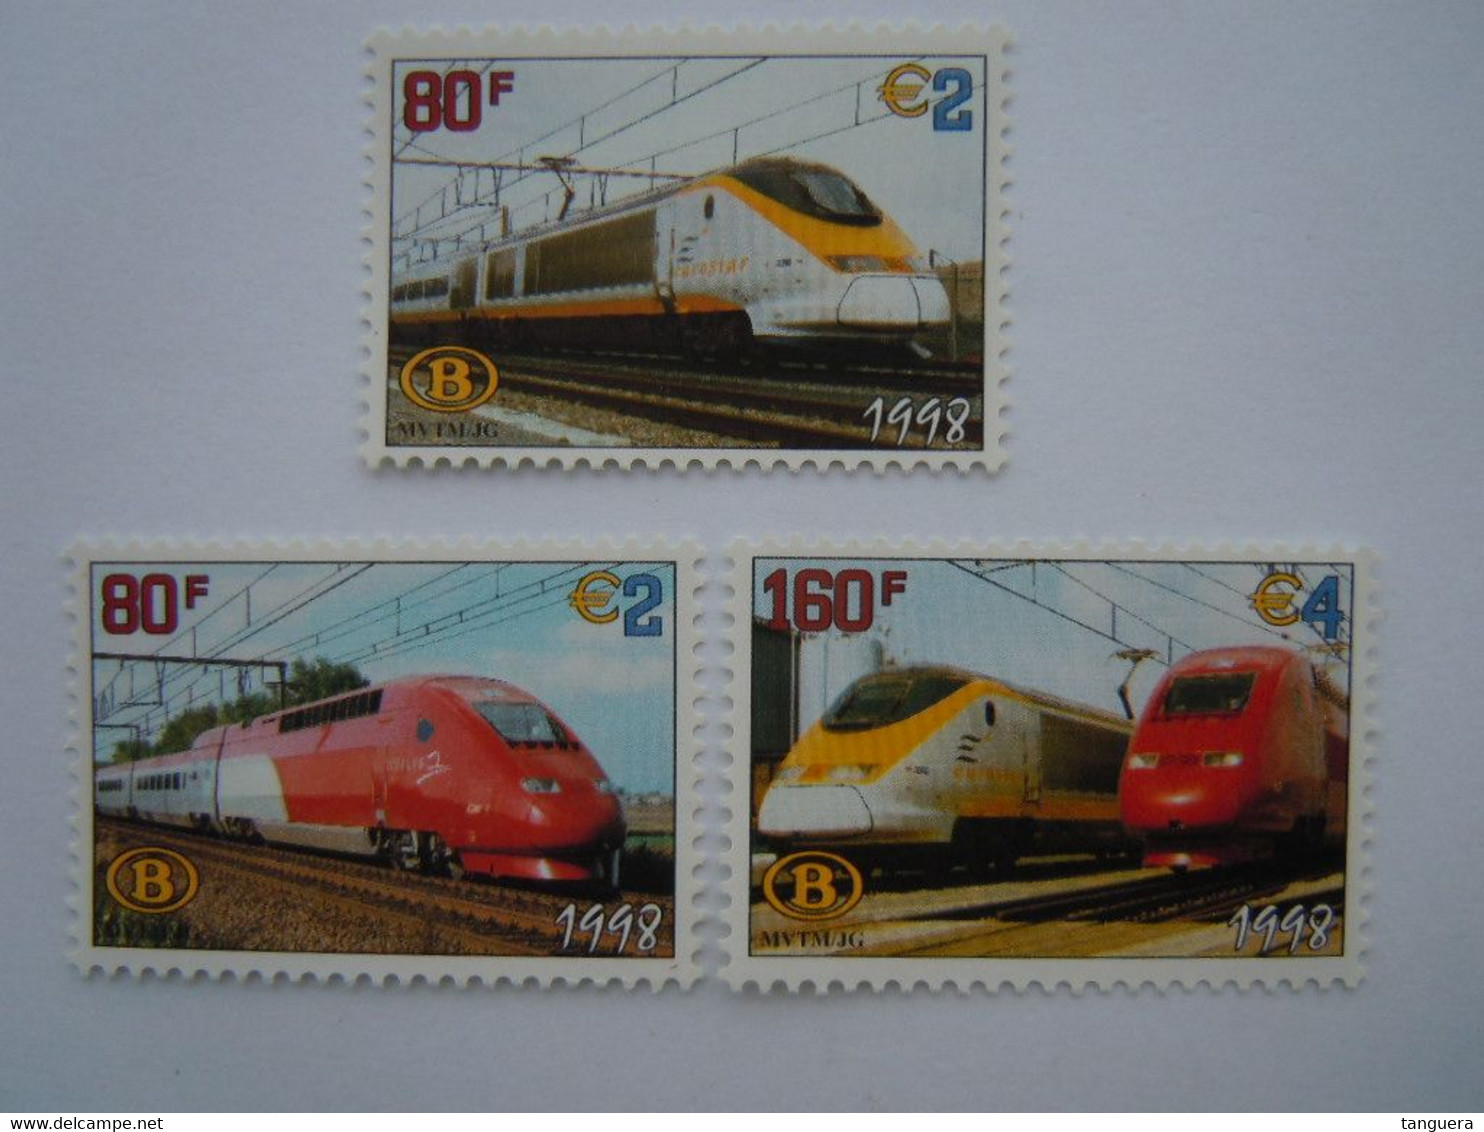 België Belgique 1998 Spoorwegvignet Vignette Chemins De Fer Eurostar Thalys Trein Train TRV6/8 MNH ** - 1996-2013 Labels [TRV]